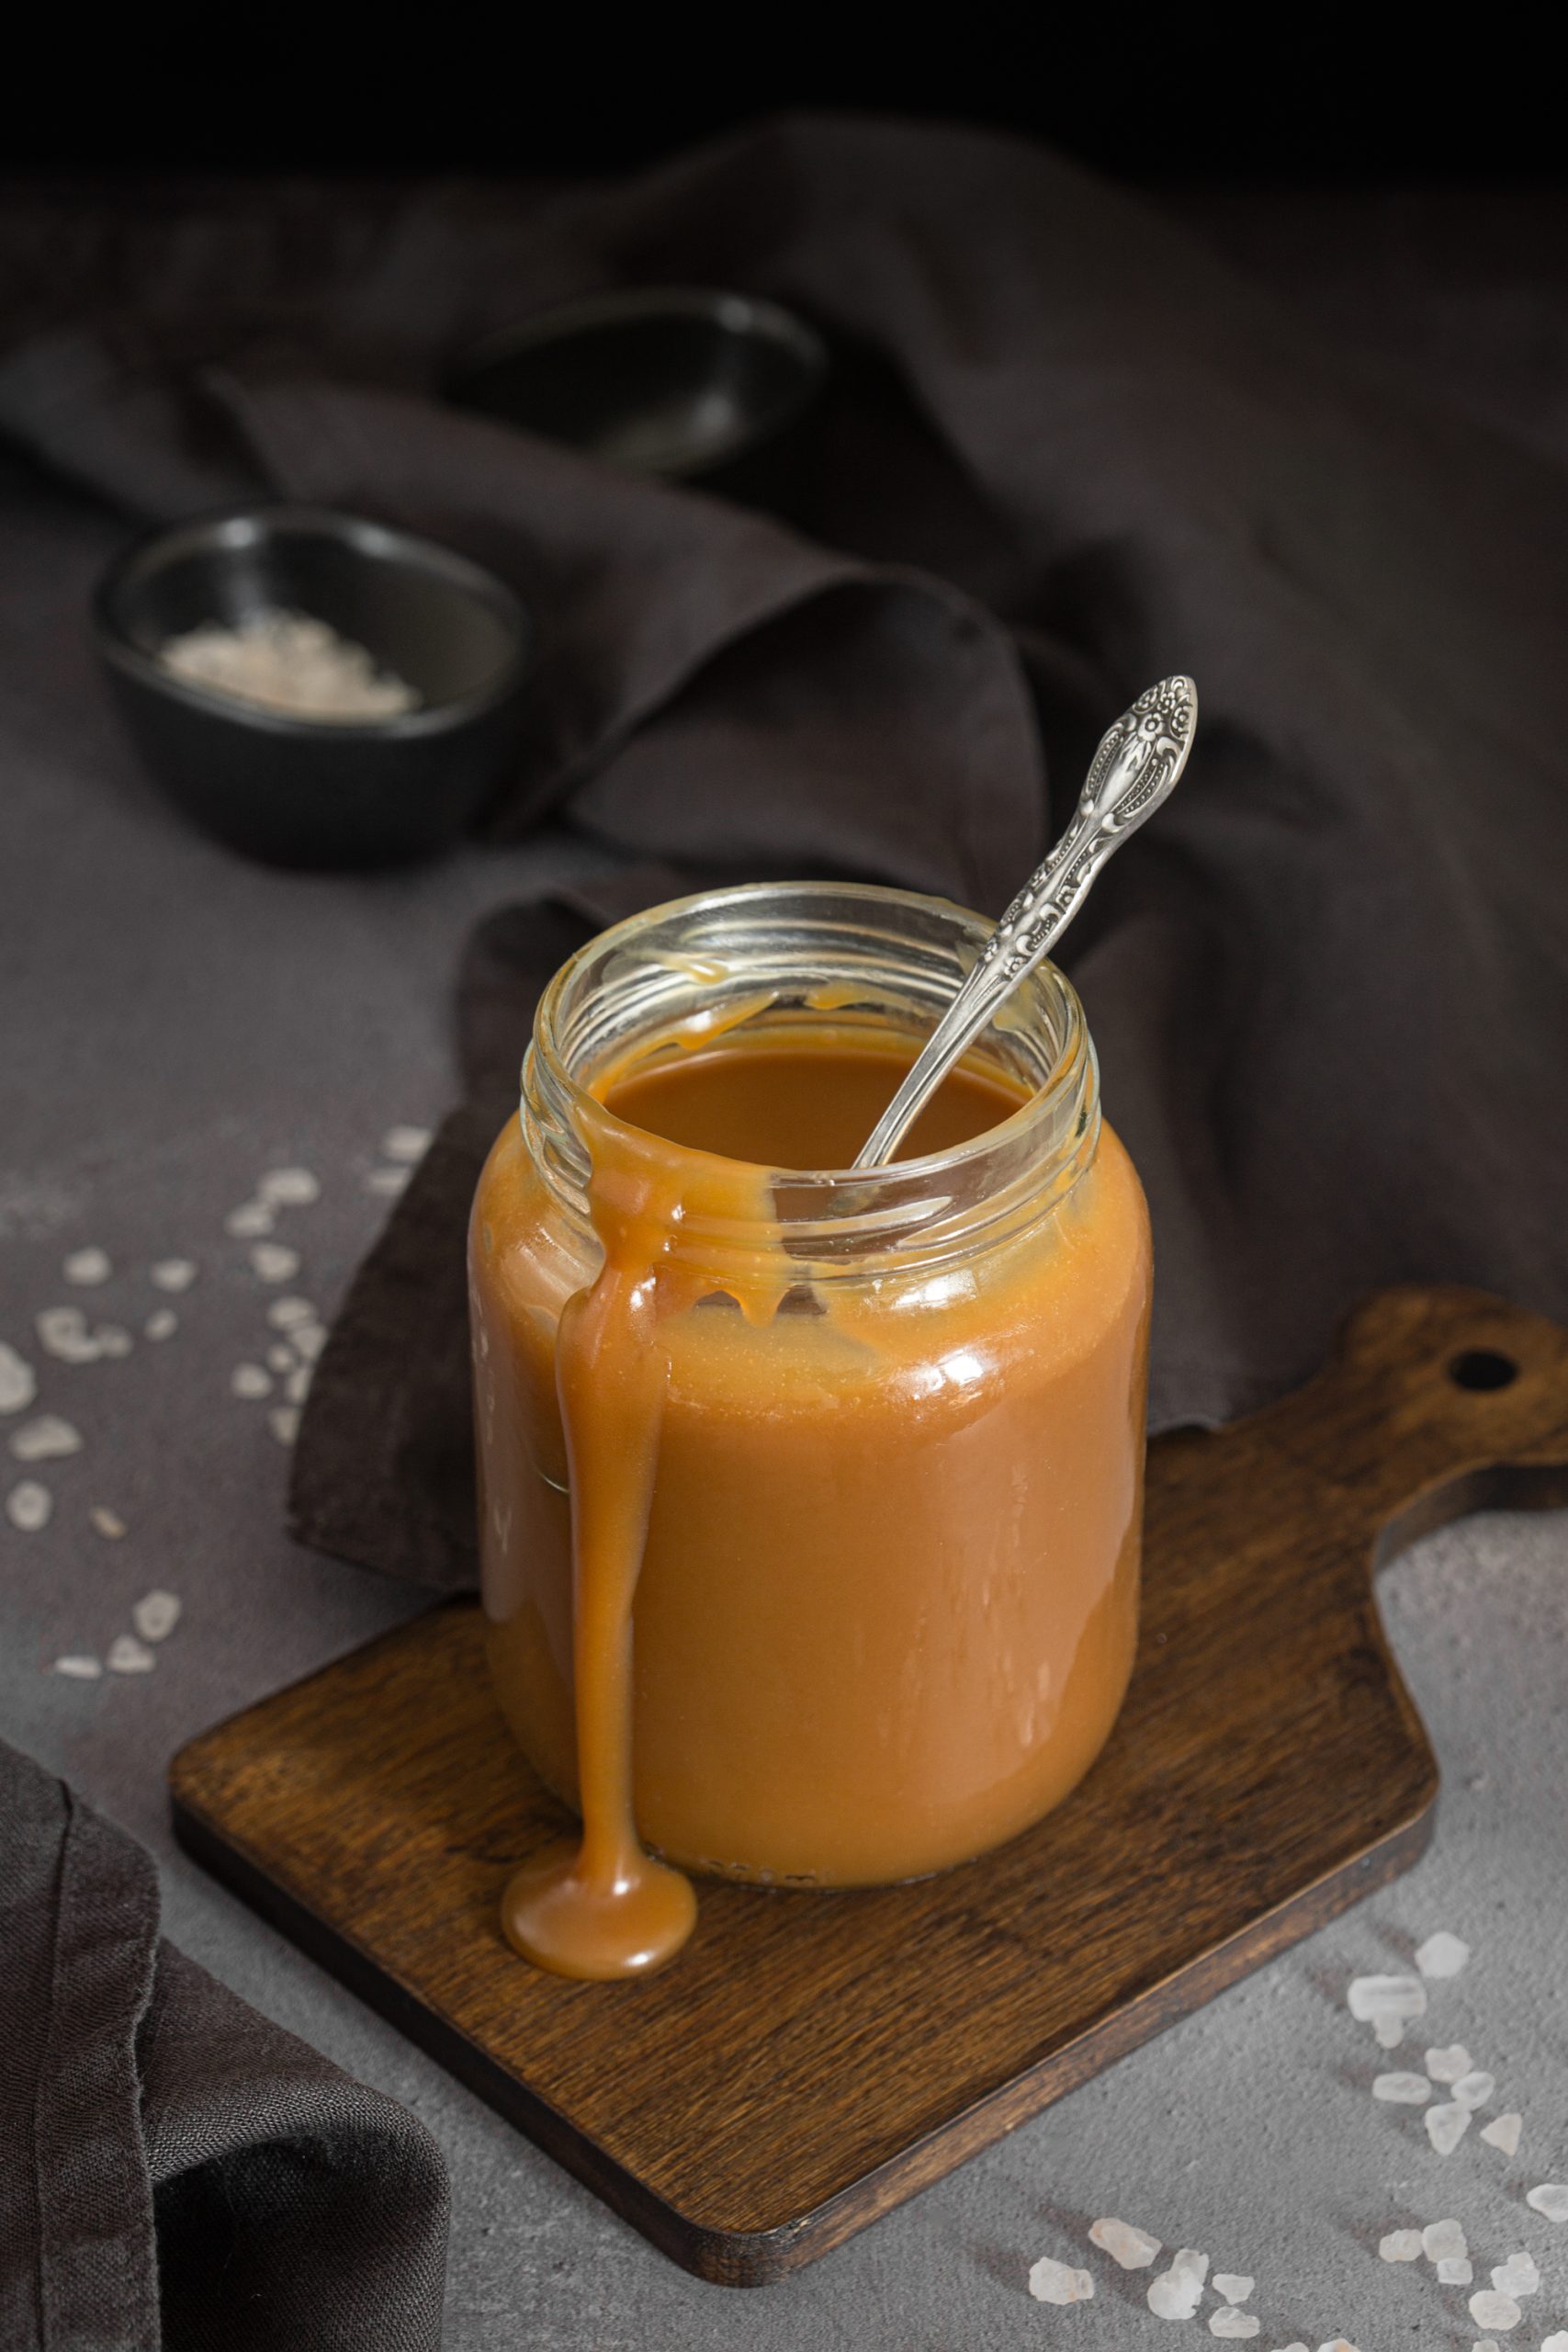 Salted caramel sauce in a glass jar